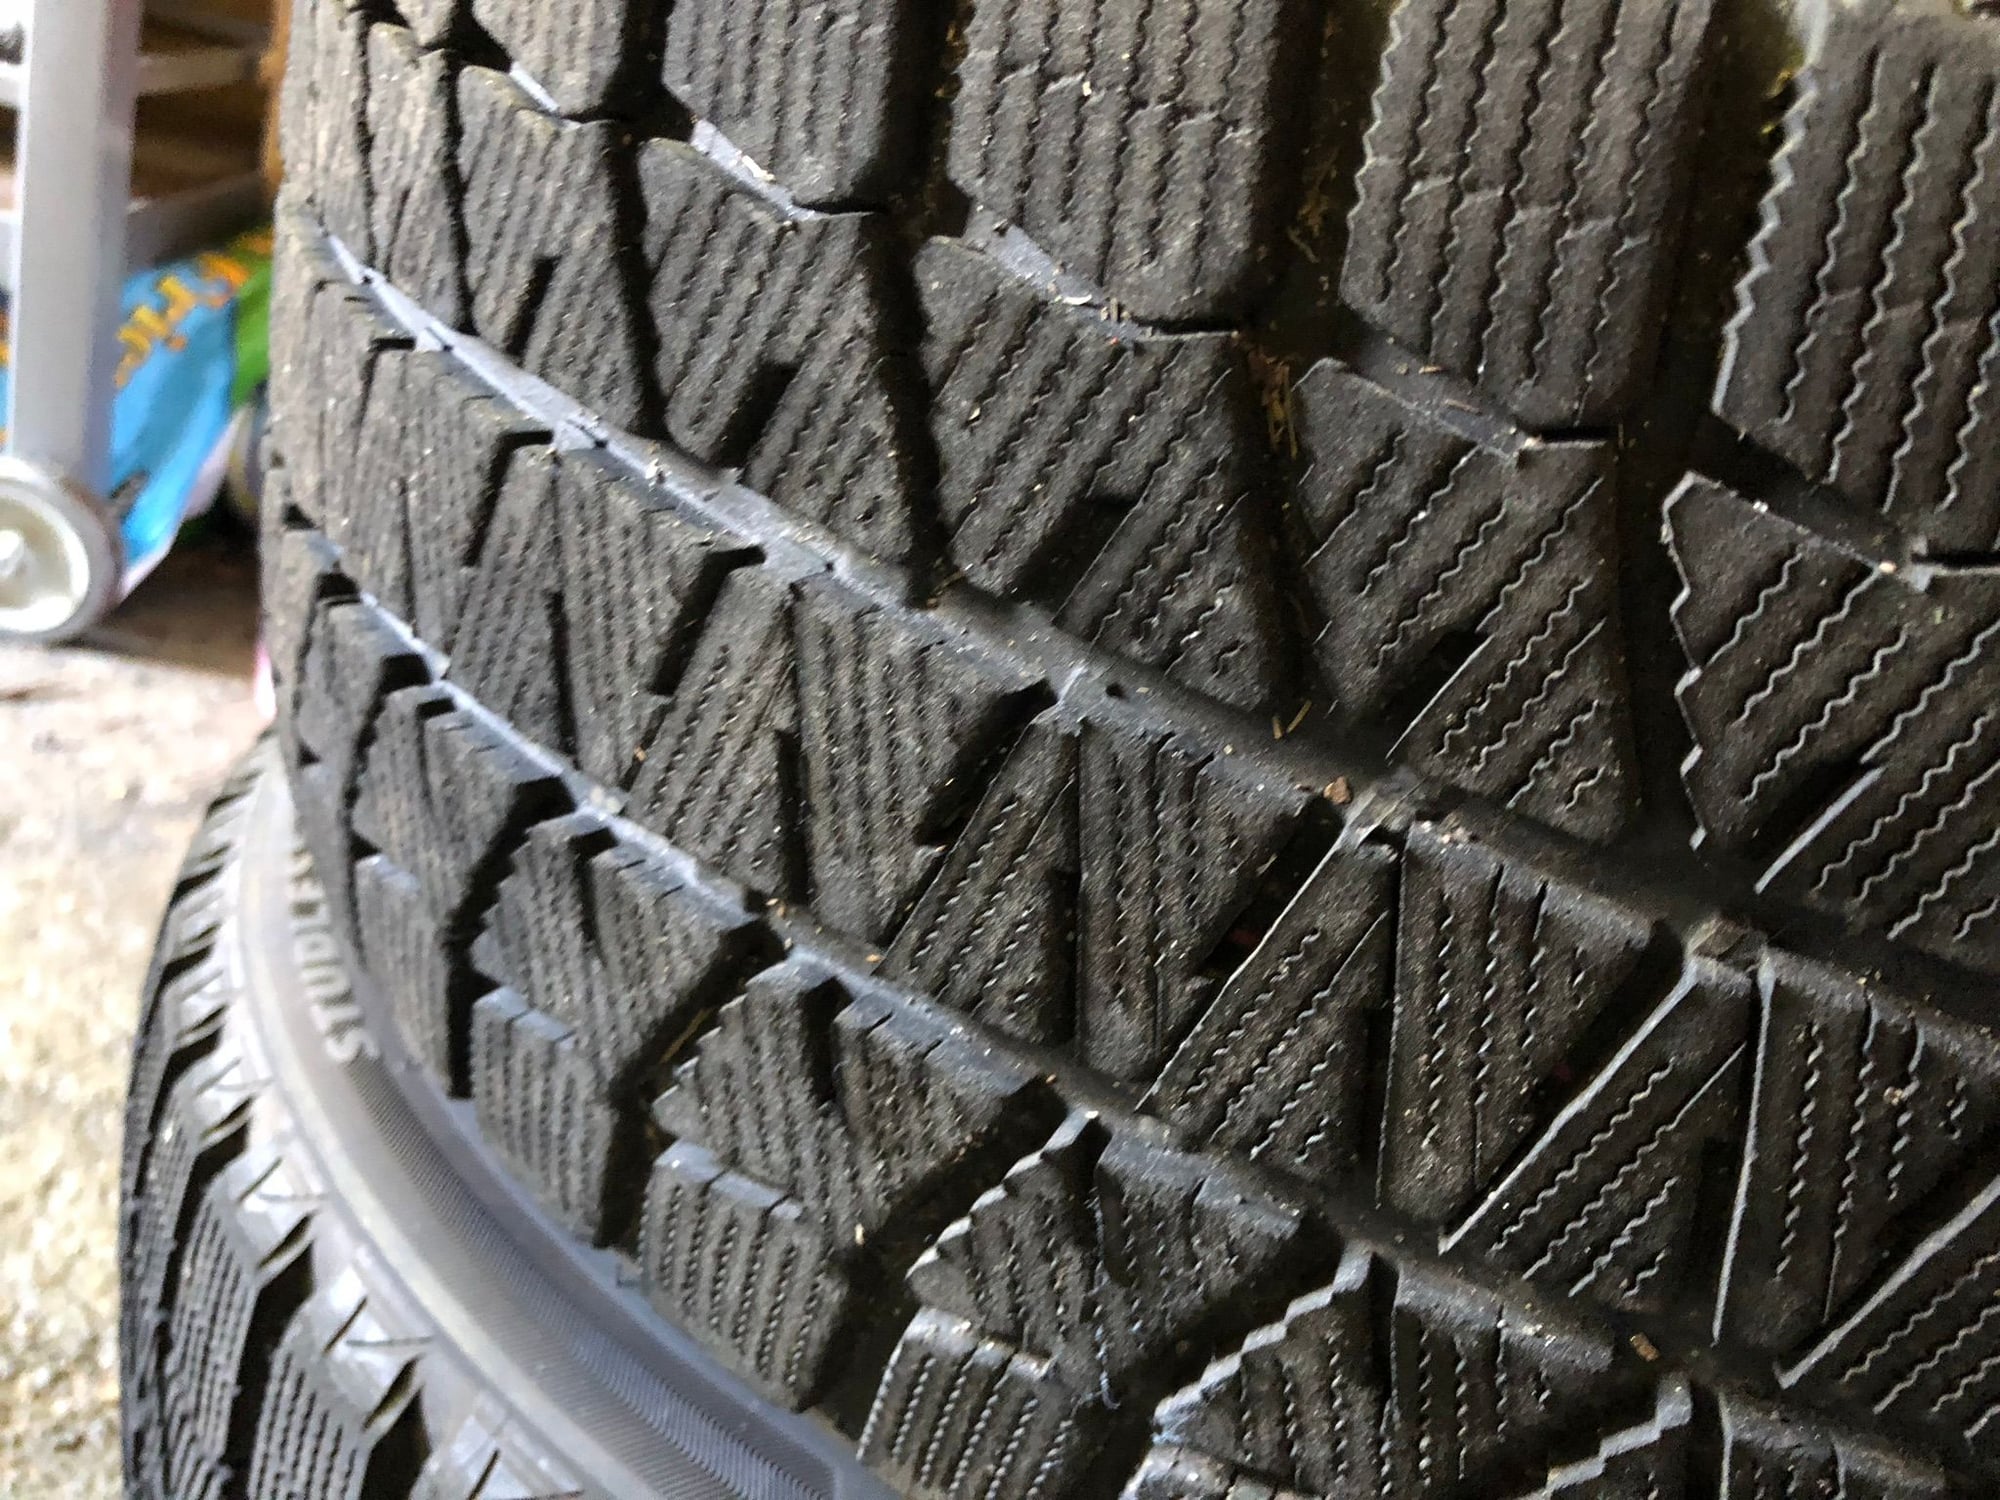 Wheels and Tires/Axles - W204 C63 Hoosier Drag Radials & Bridgestone Blizzak Winter - Used - 2008 to 2015 Mercedes-Benz C63 AMG - Boston, MA 02124, United States